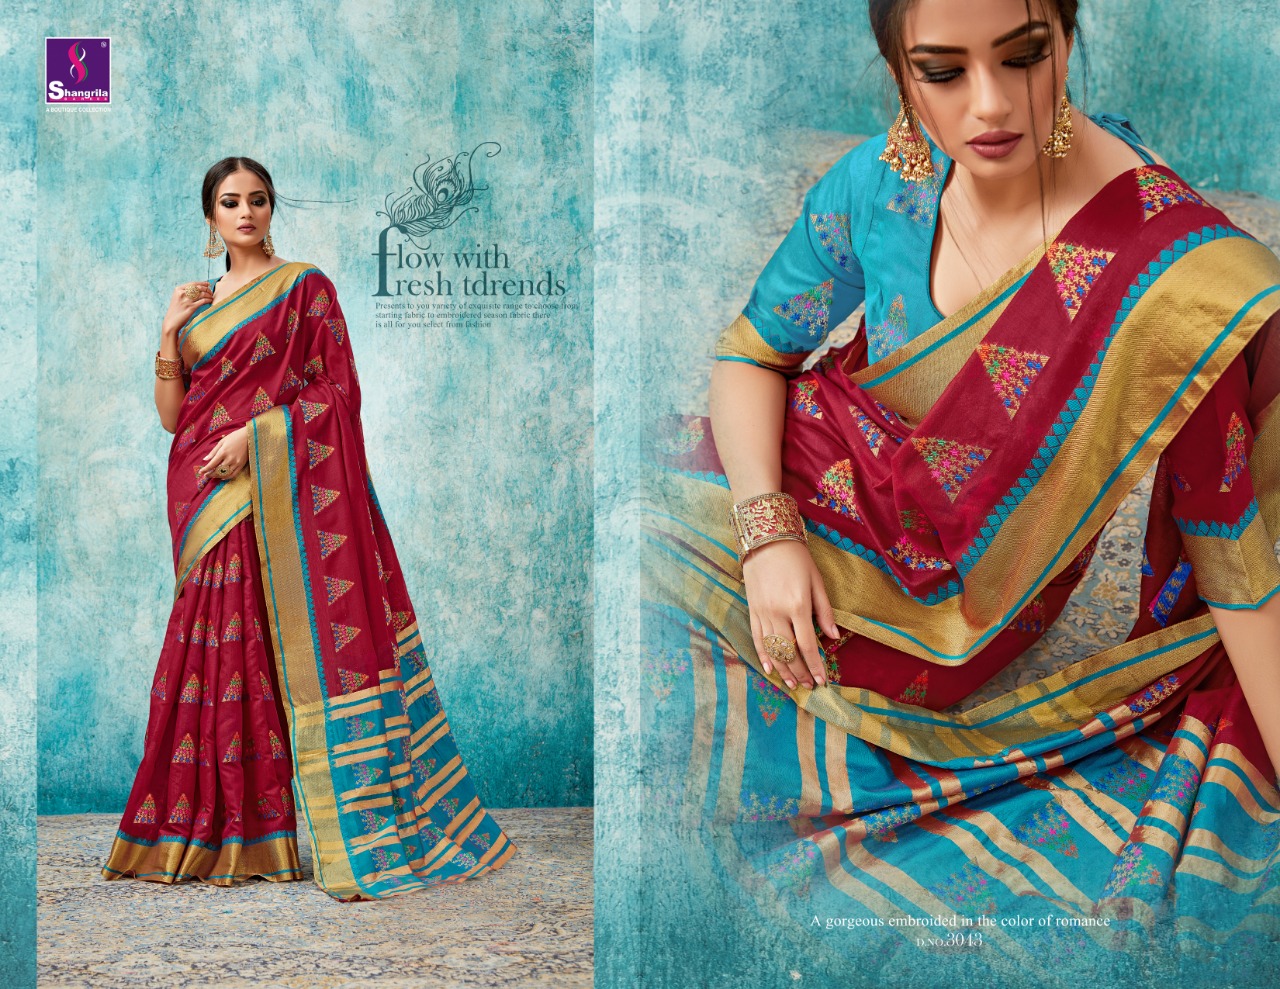 Shangrila Presenting arisha silk casual silk with meenakari weaving sarees collection